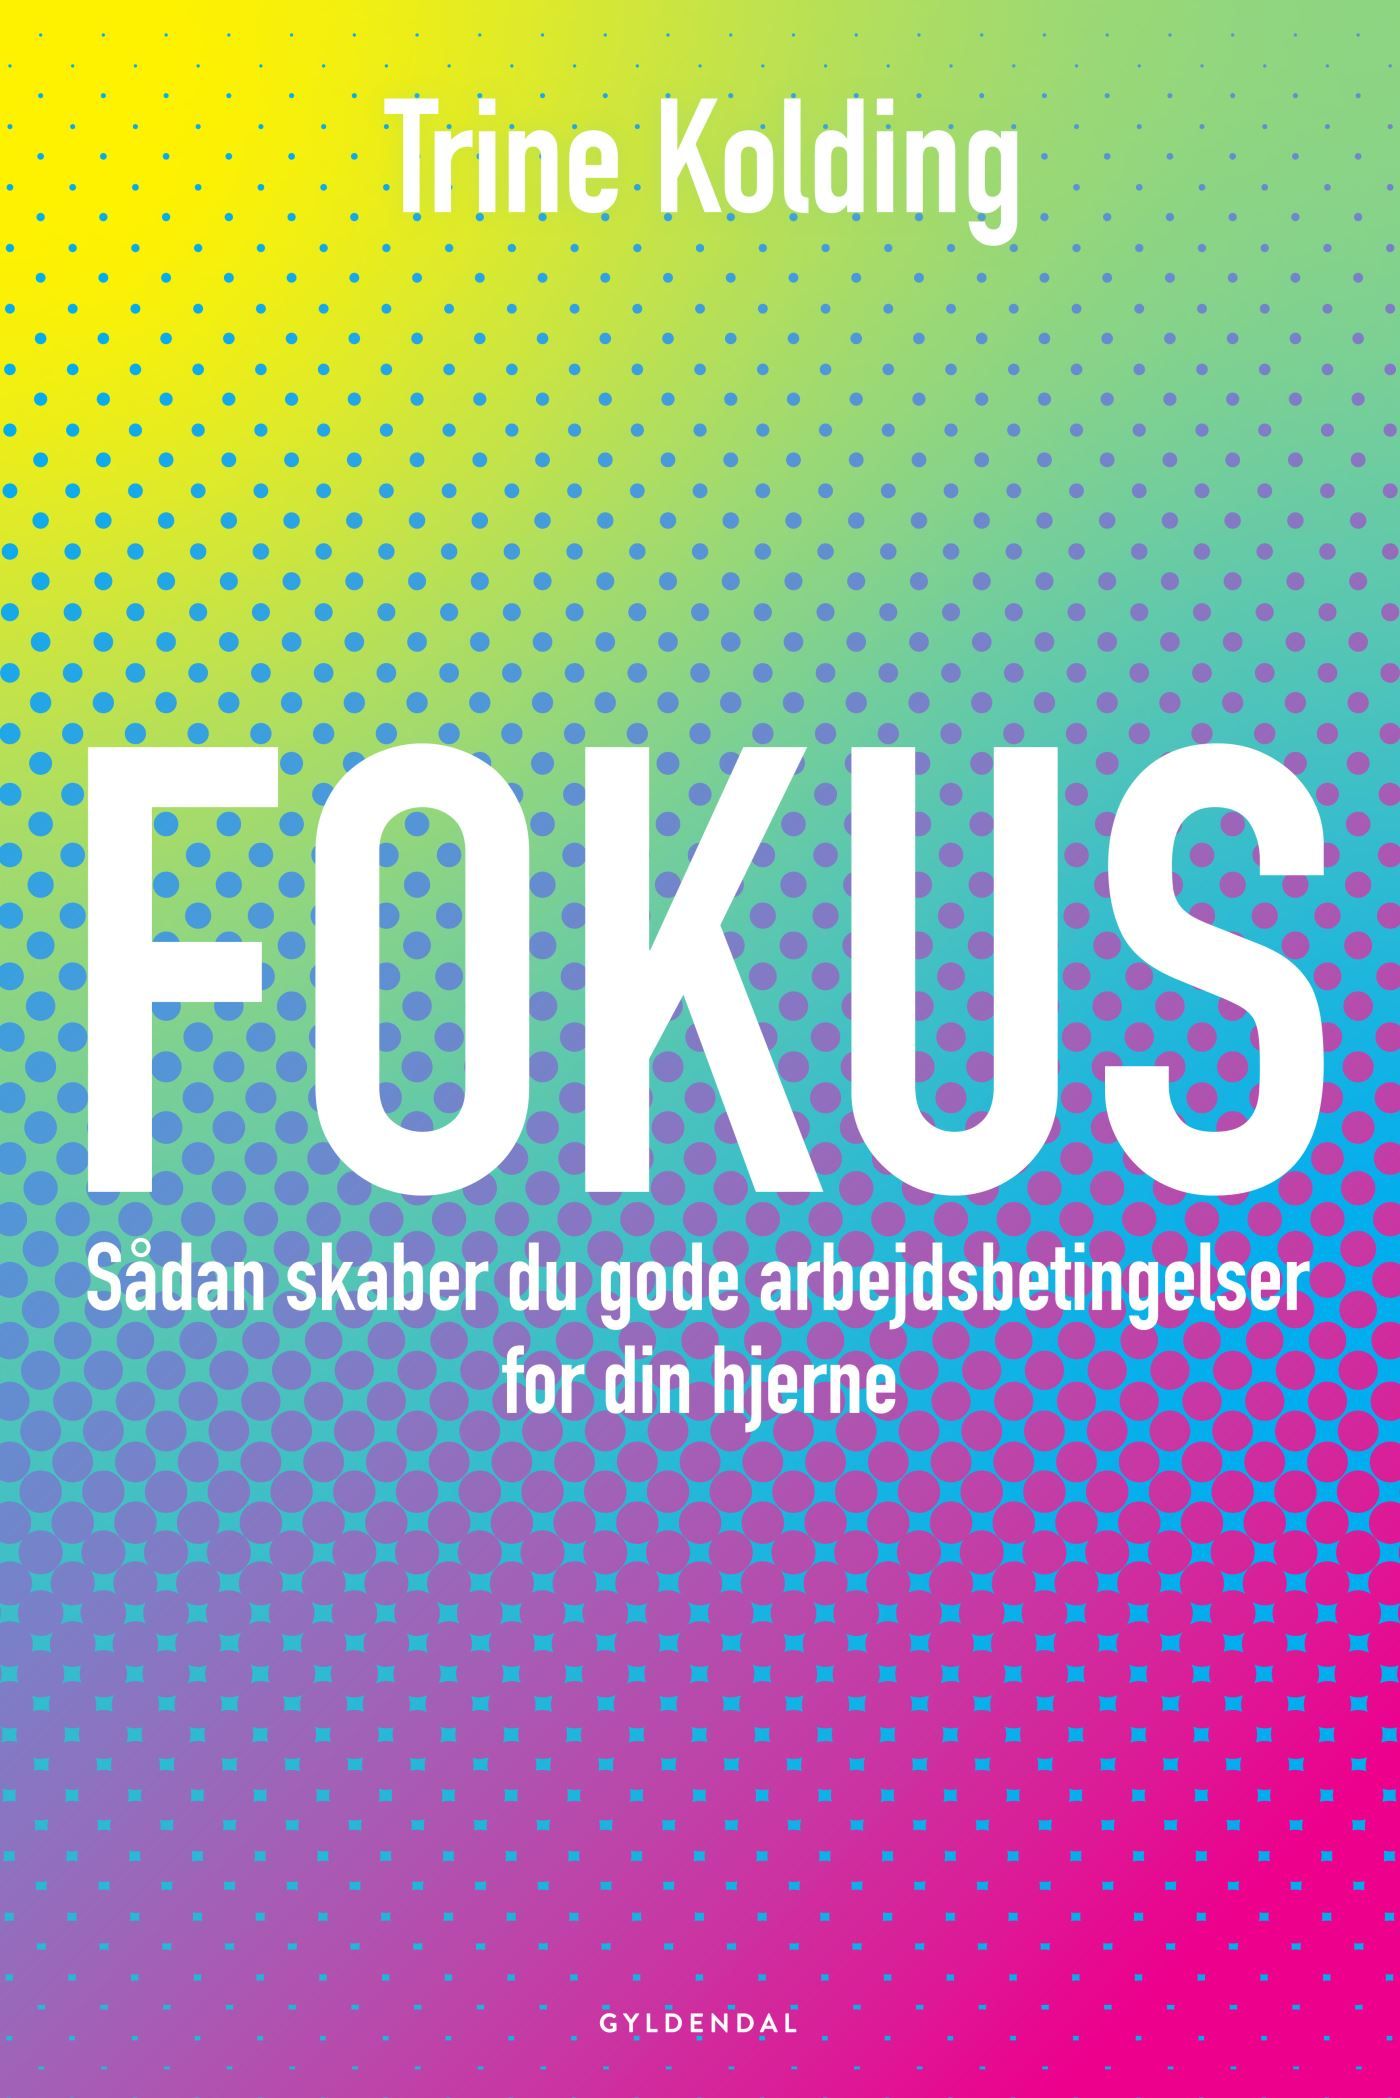 Fokus, audiobook by Trine Kolding